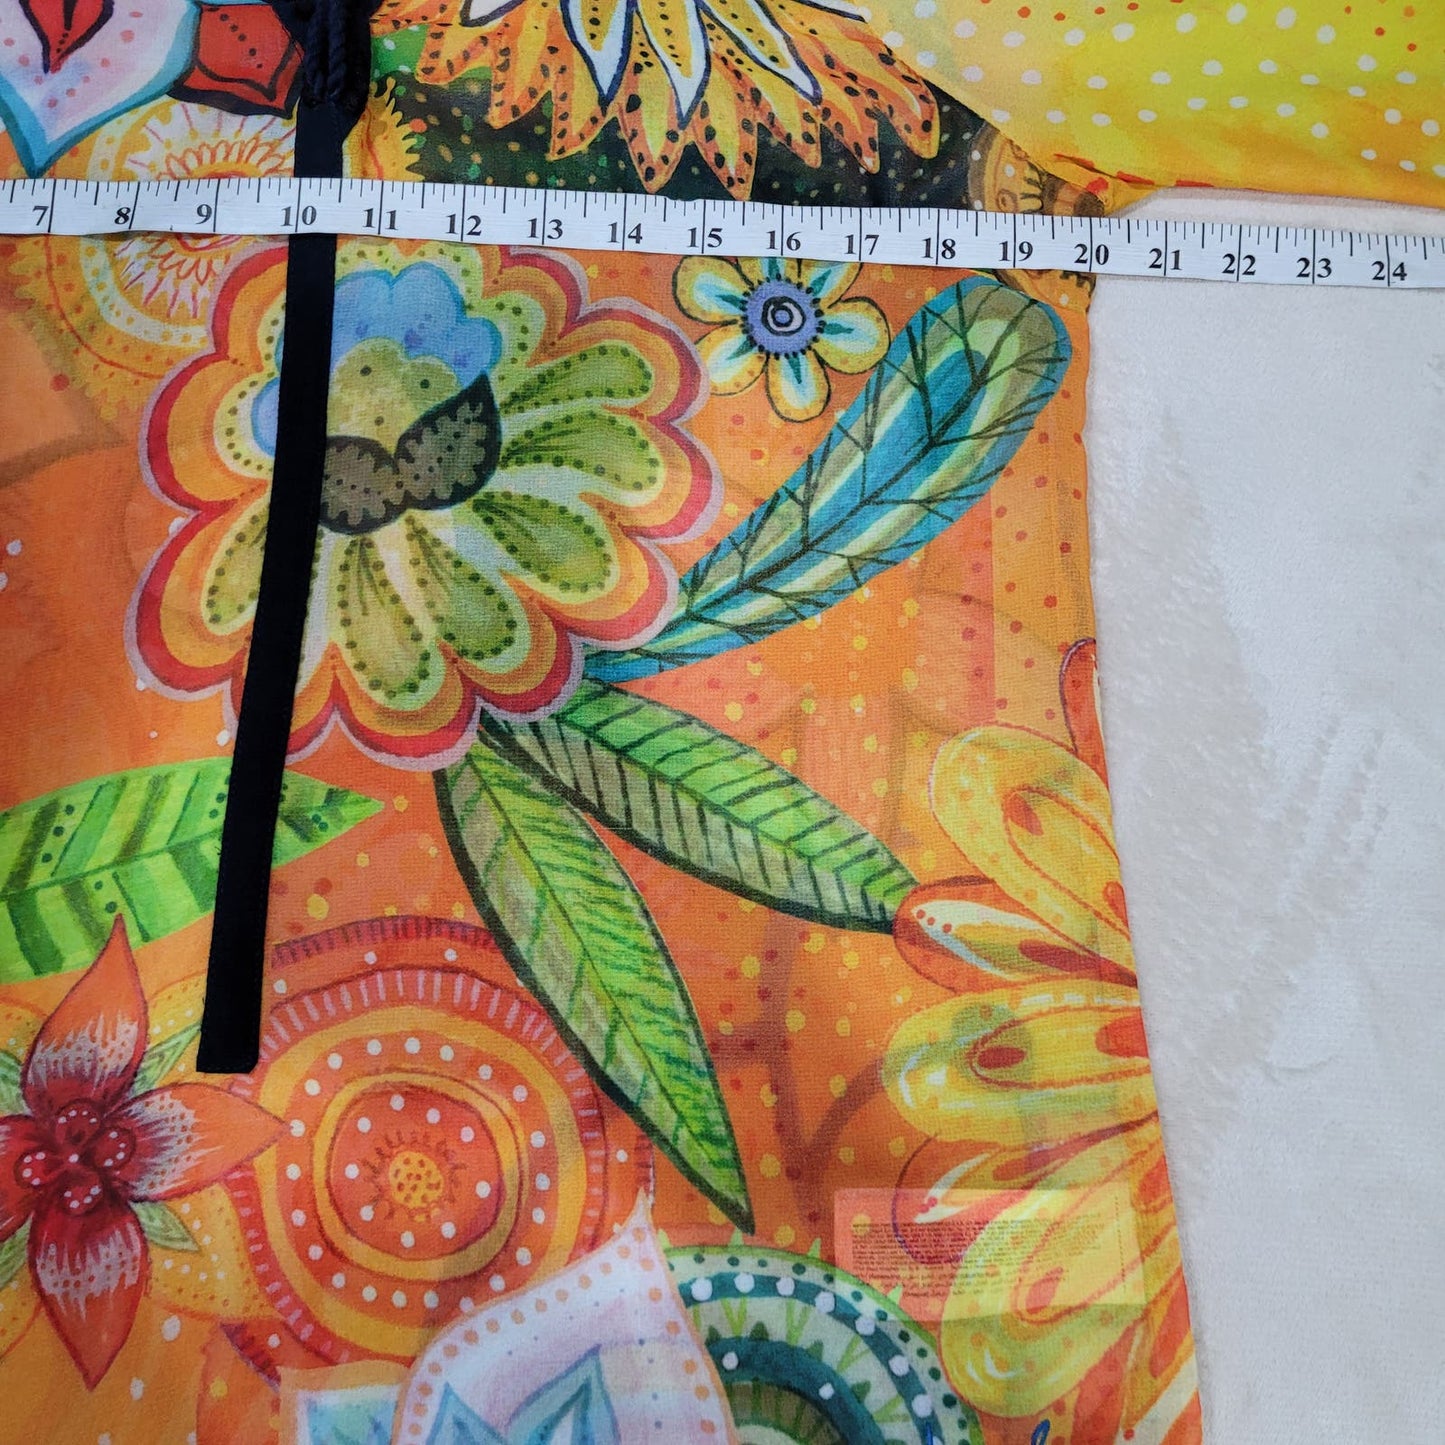 Desigual Mandarina Boho Blouse with Embroidered Cuffs - Size Large